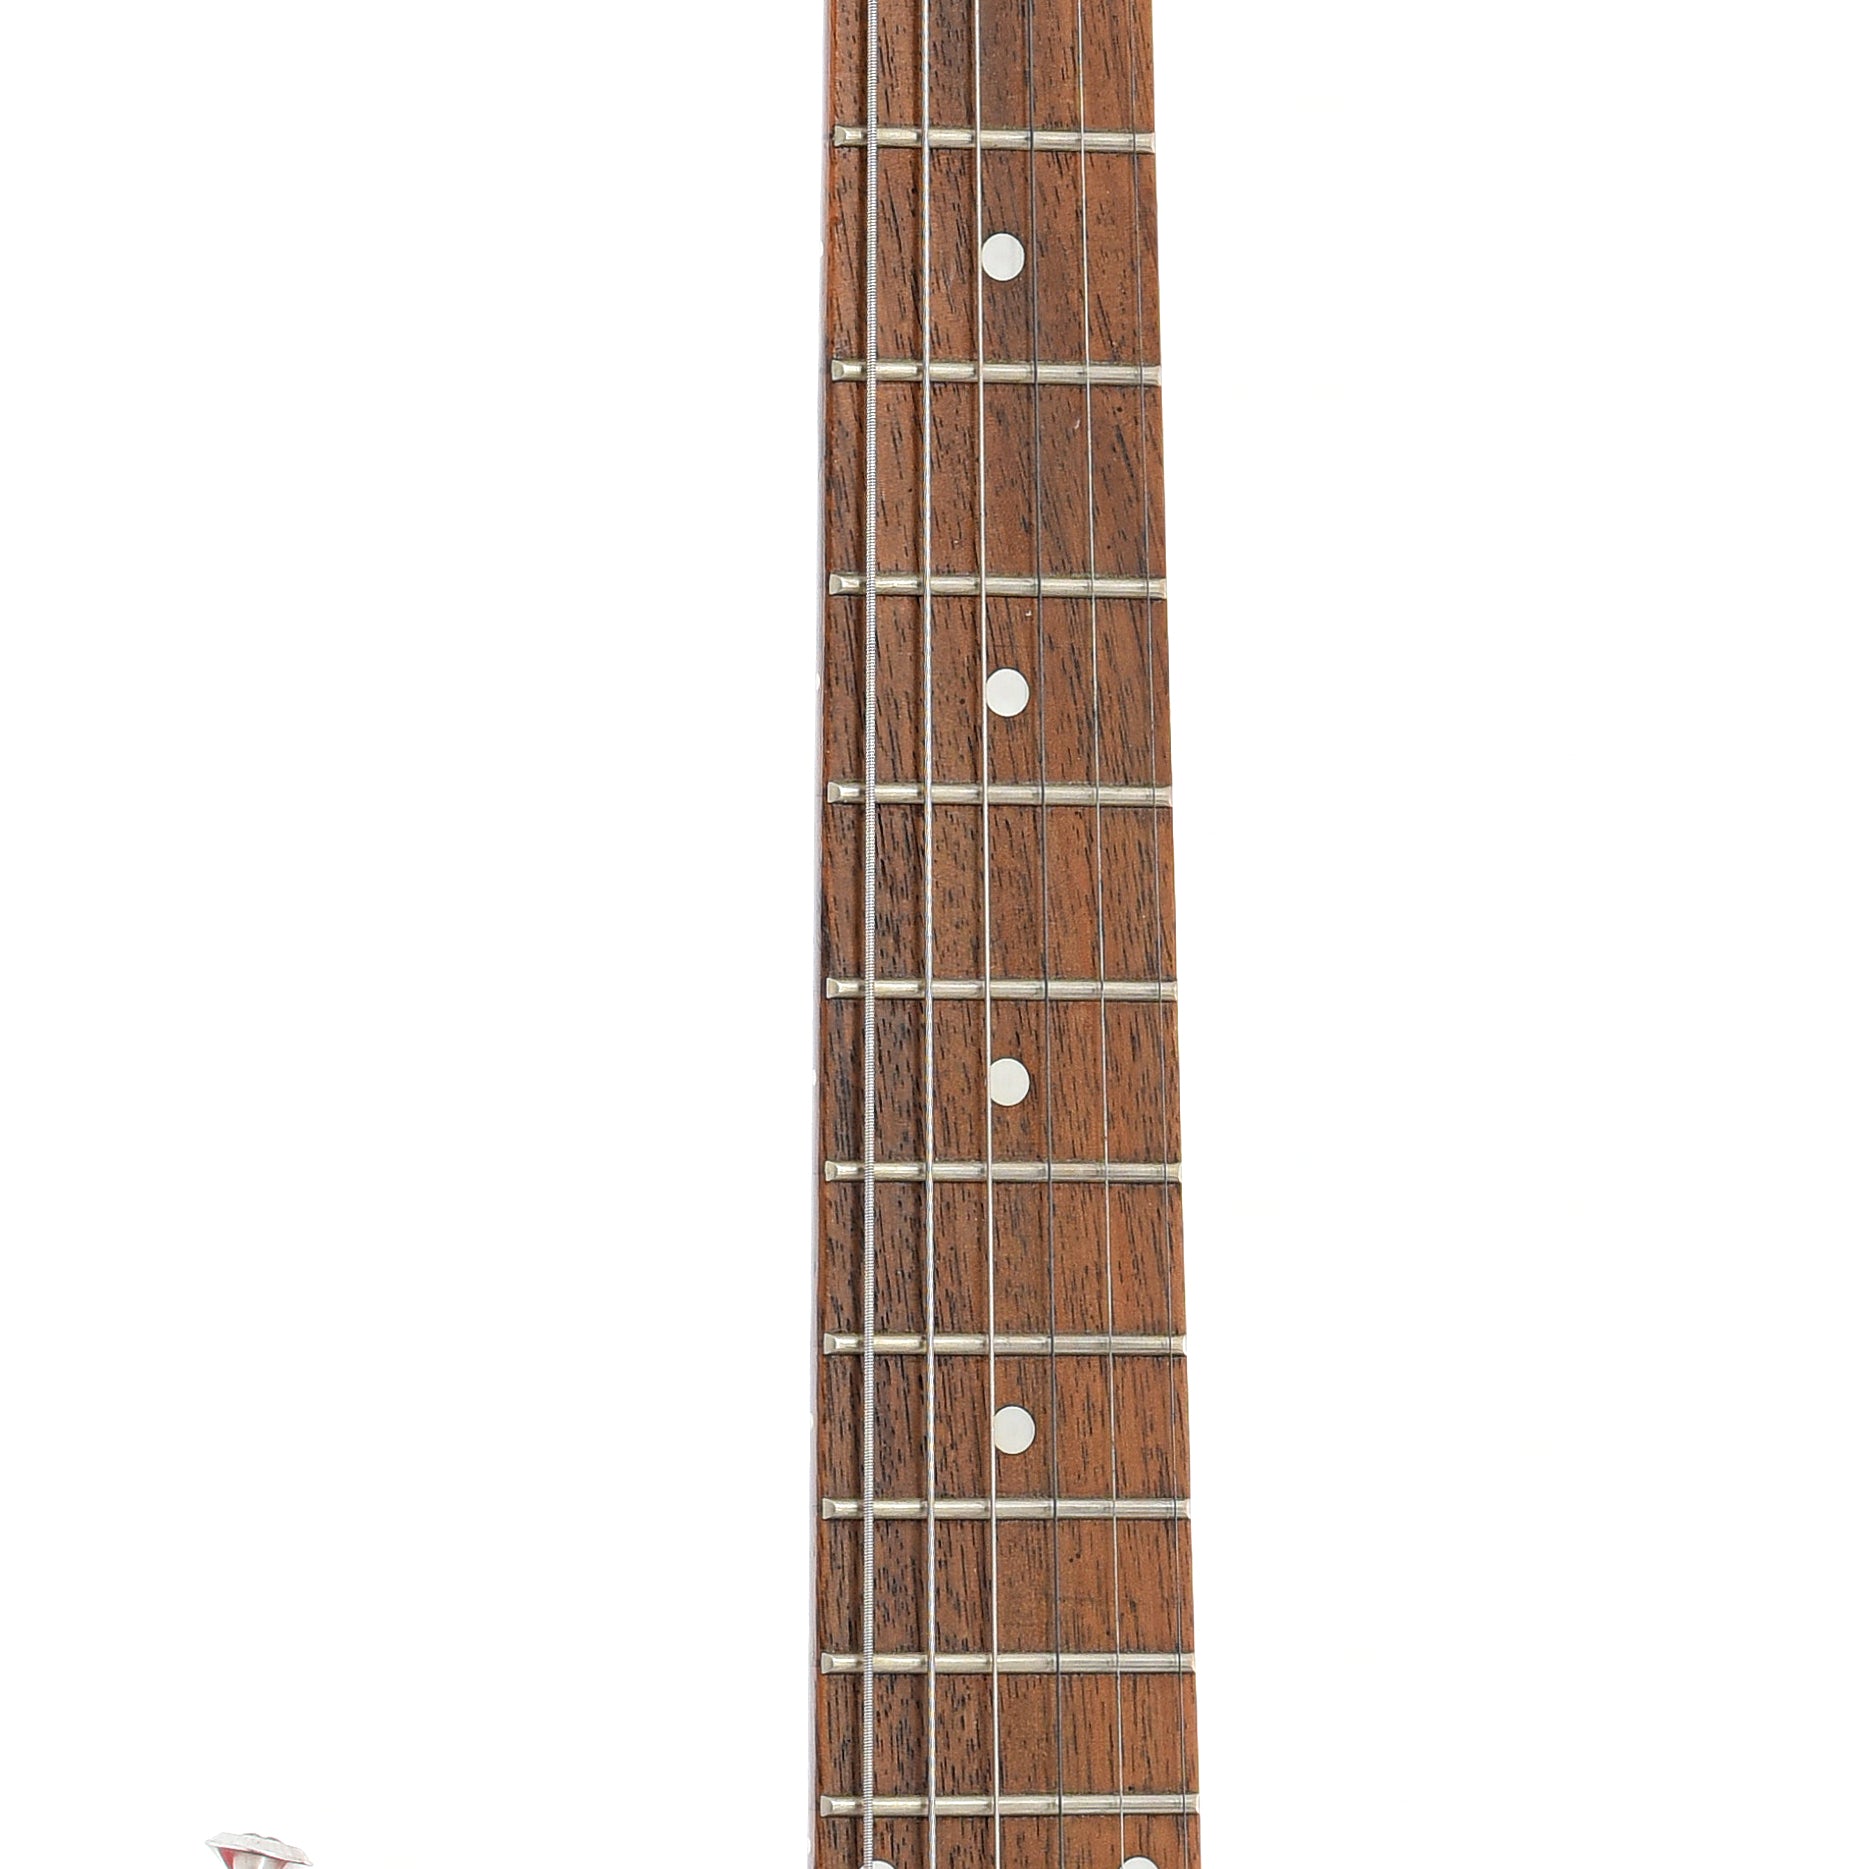 Fretboard of Squier Mini Stratocaster Electric Guitar